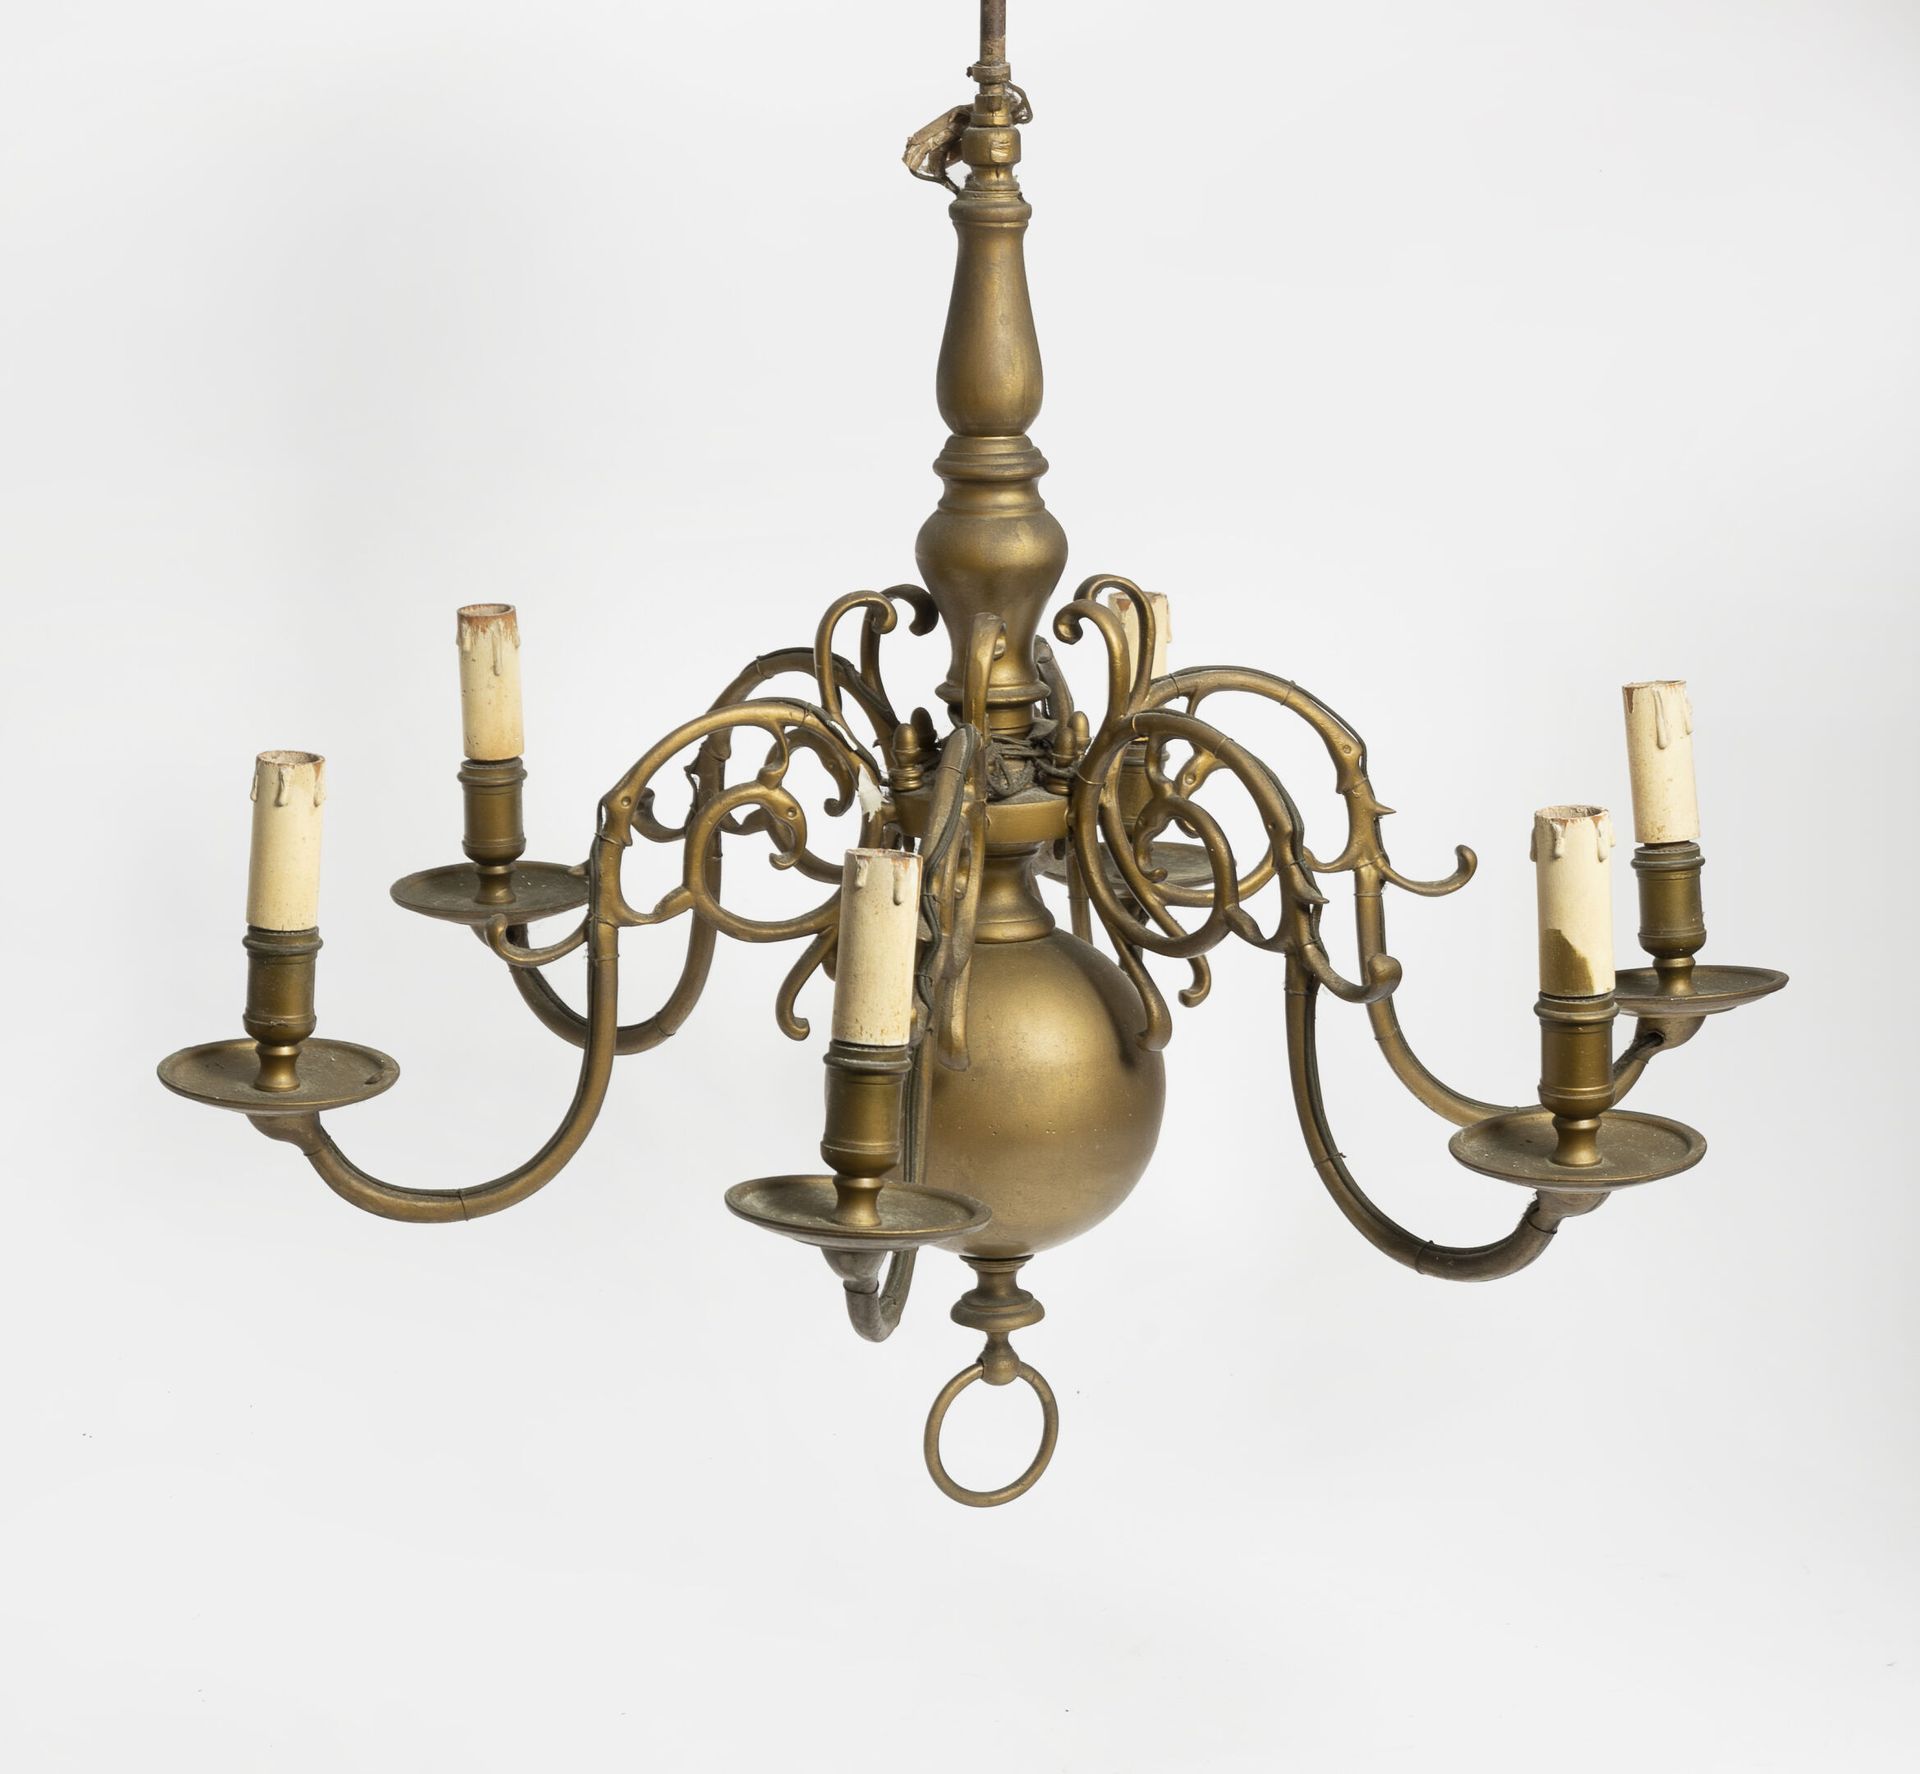 HOLLANDE, XXème siècle Lampadario in ottone con sei braccia a spirale.

Elettrif&hellip;